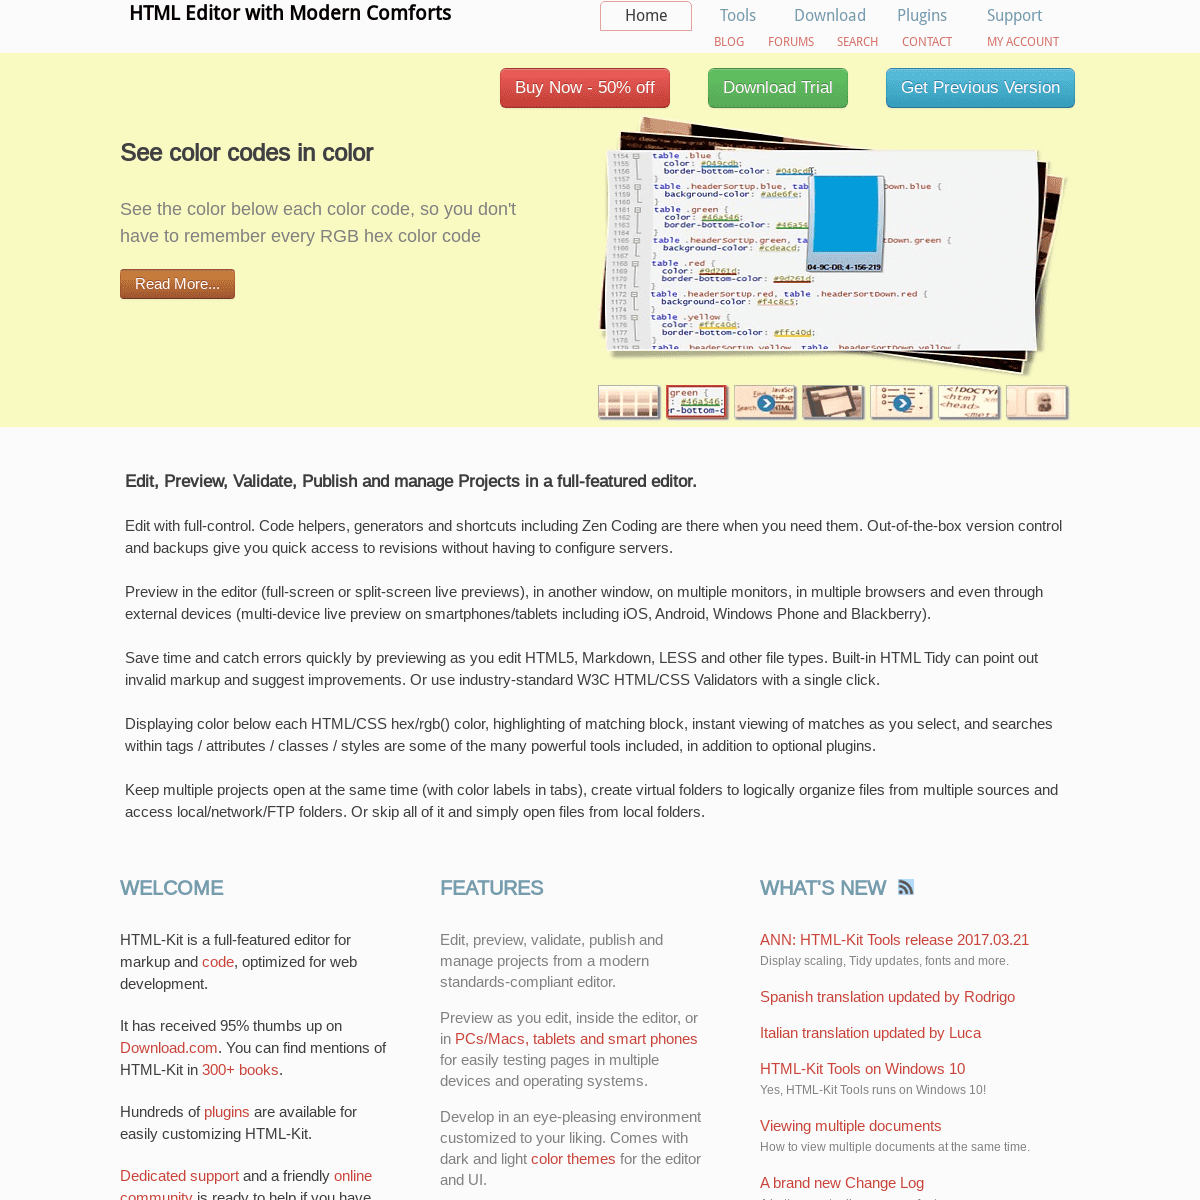 A complete backup of html-kit.com